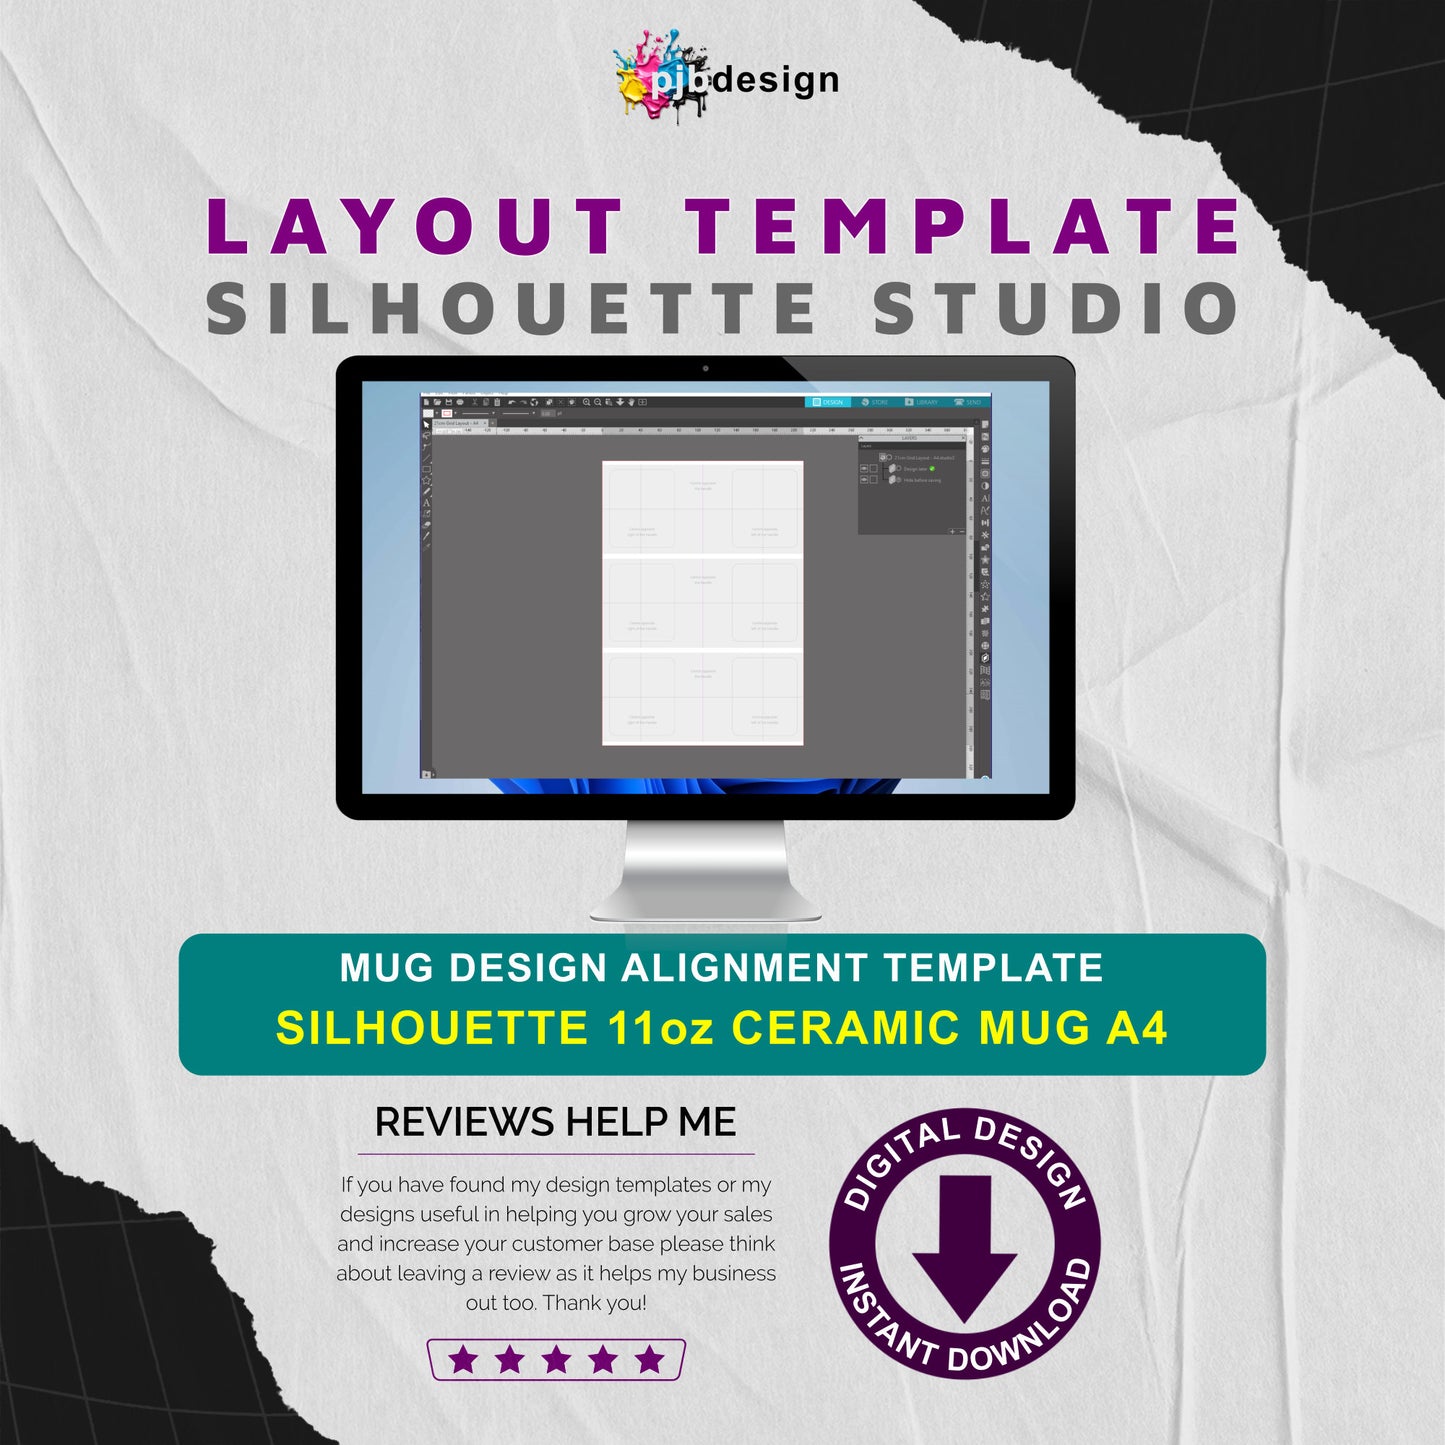 Silhouette Studio 11oz Ceramic Mug Layout Design Template - 3 Wraps A4 Page